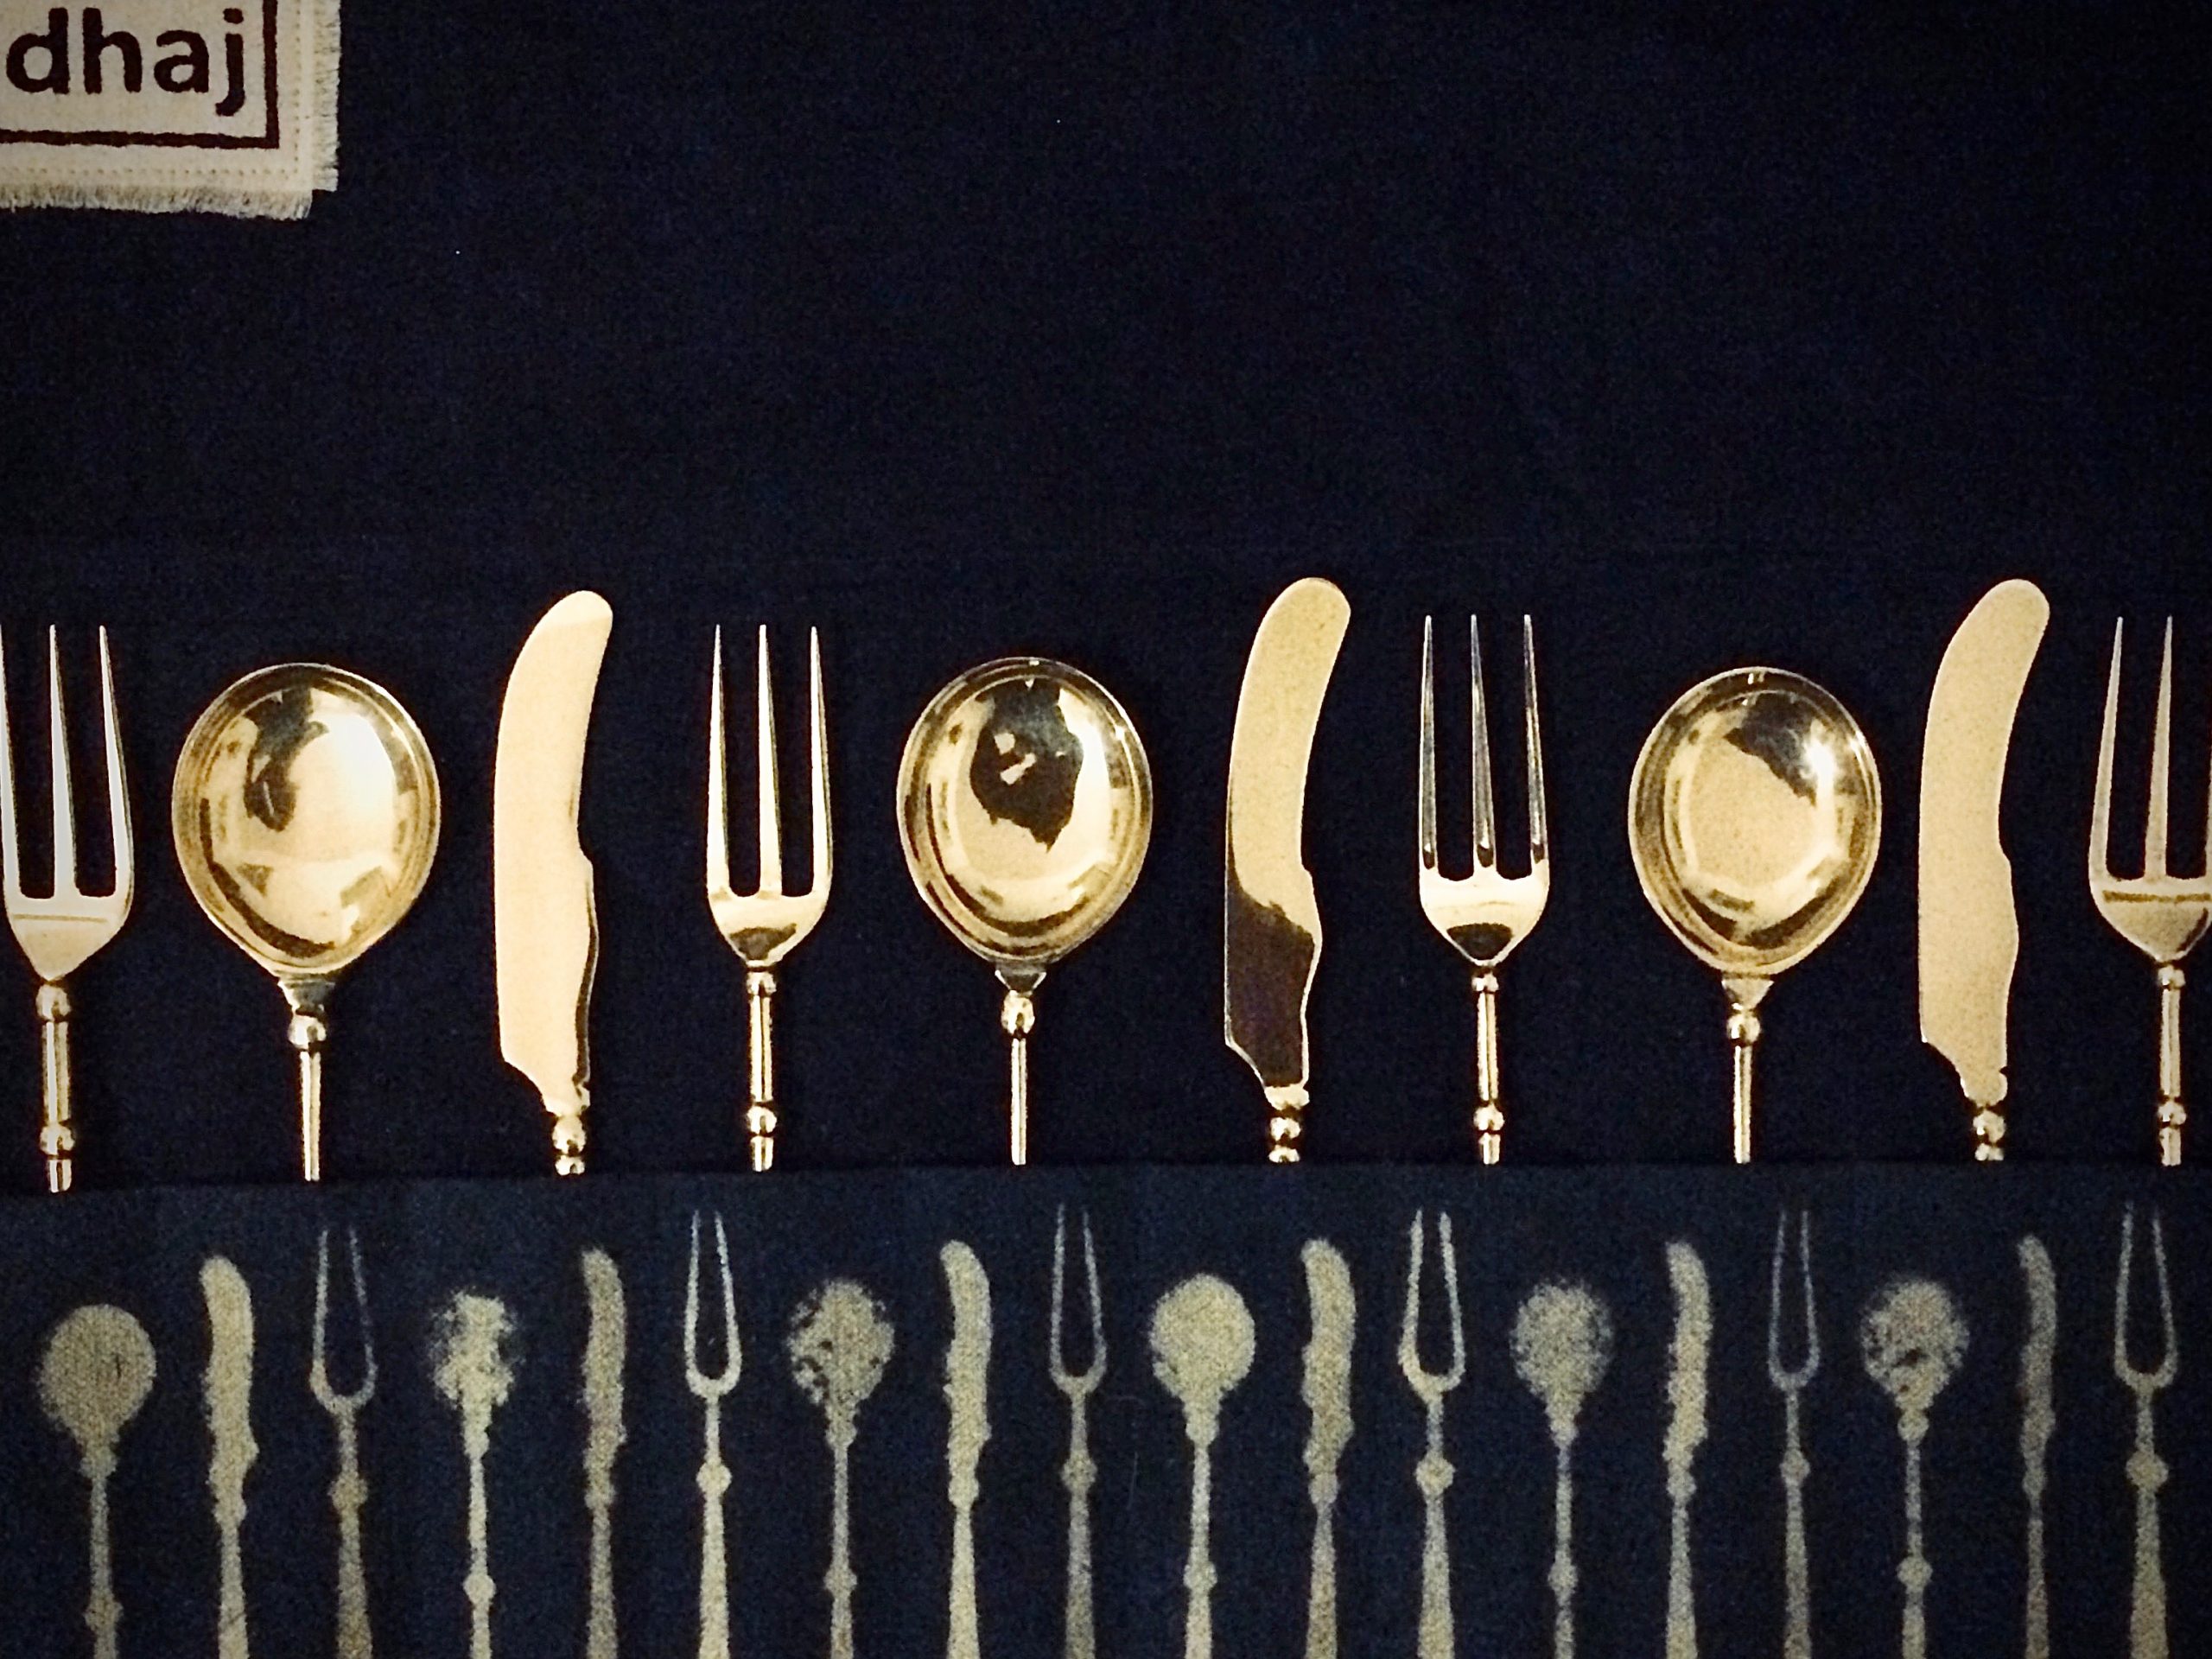 Dhaj handmade brass cutlery set - Trident set